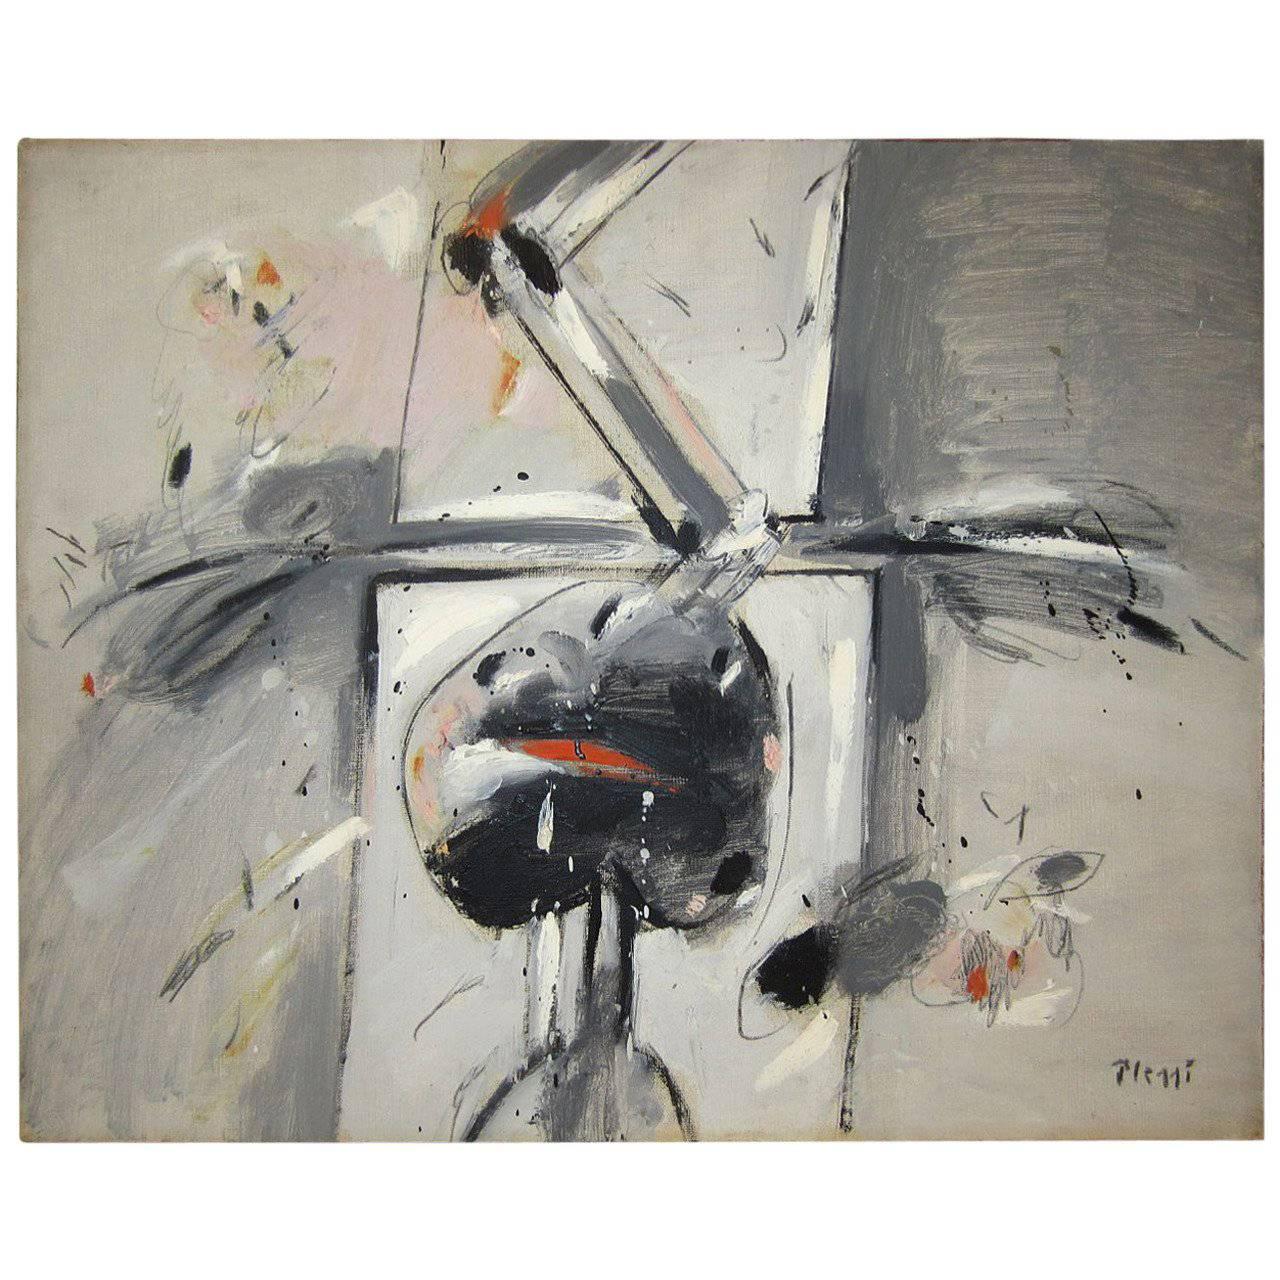 Fabrizio Plessi (1940- ) peinture à l'huile abstraite de la galerie Orler Italie